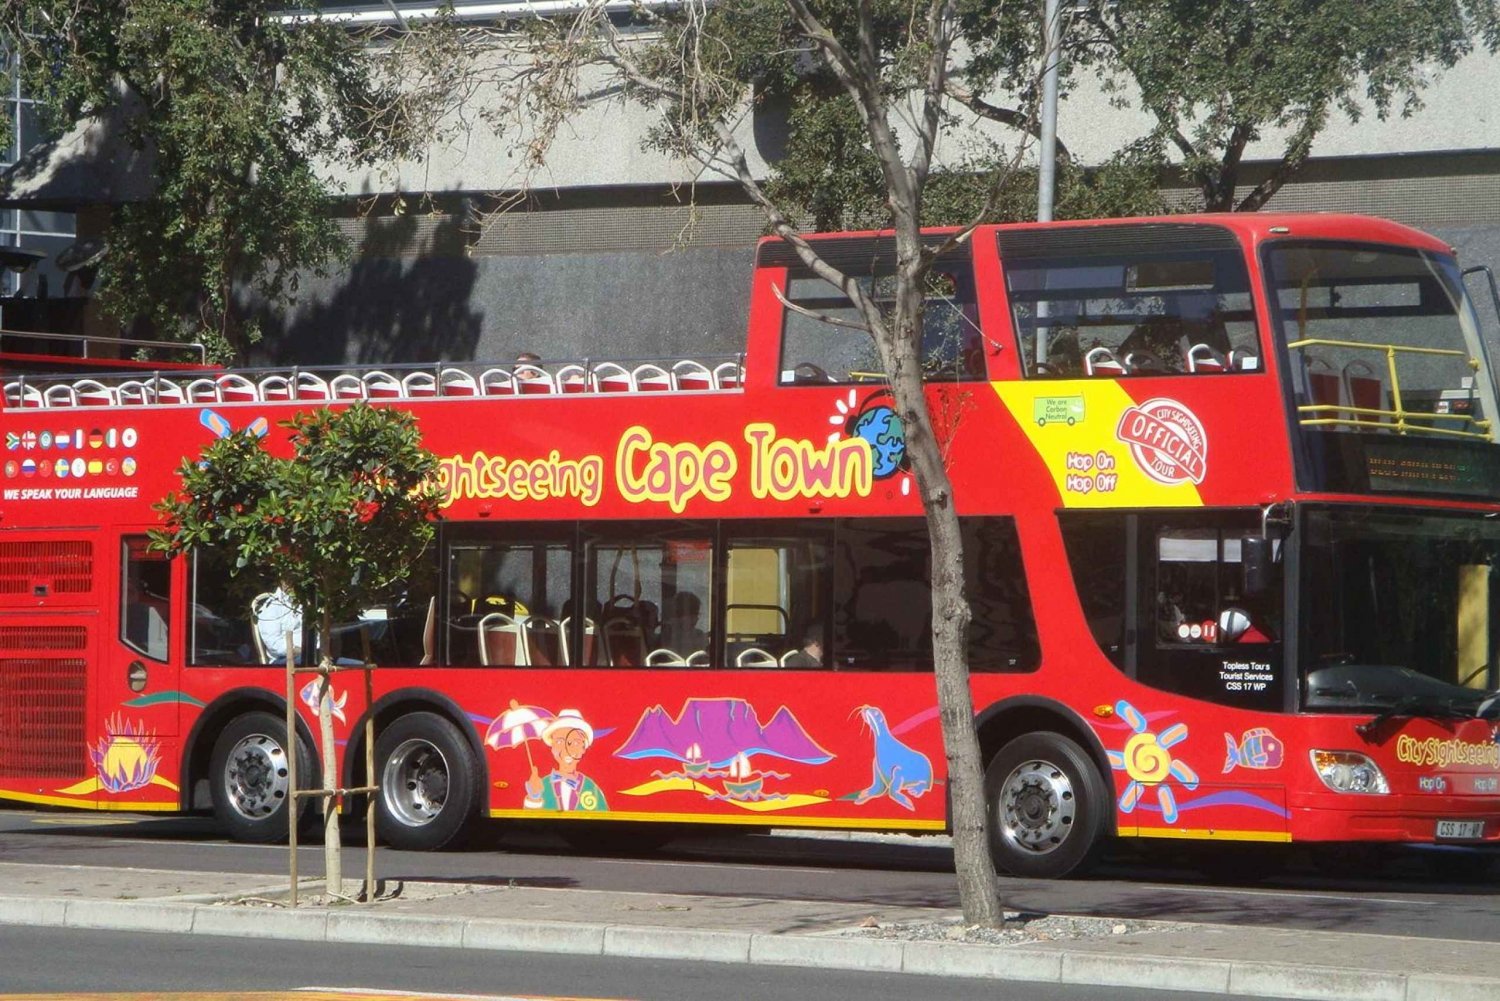 Table Mountain Cable Car Ônibus hop-on hop-off - Bilhete reservado